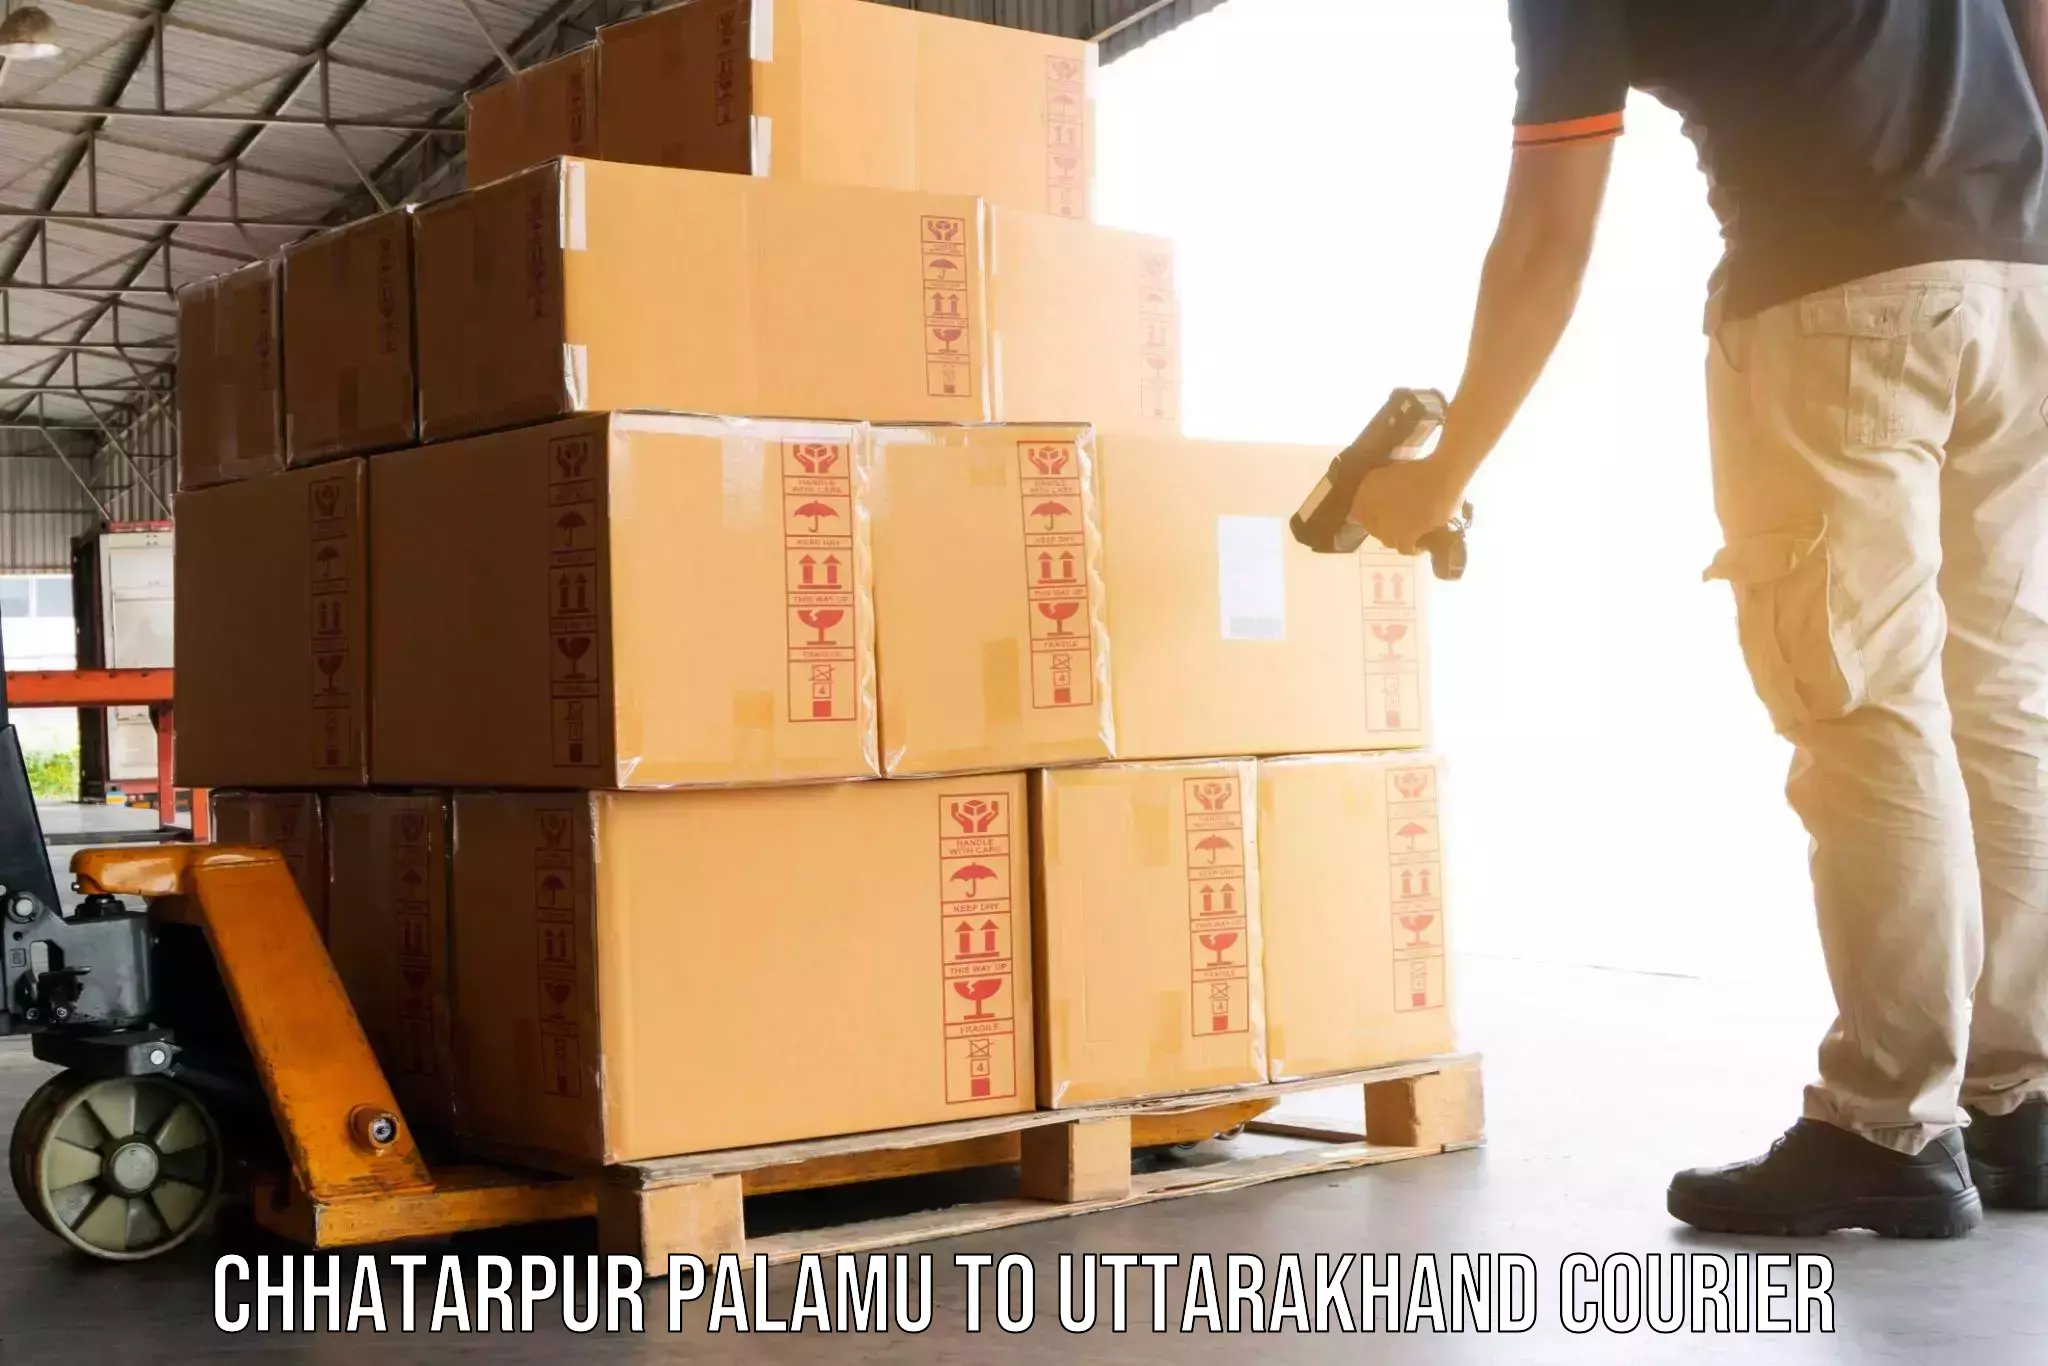 Trusted relocation experts Chhatarpur Palamu to Tehri